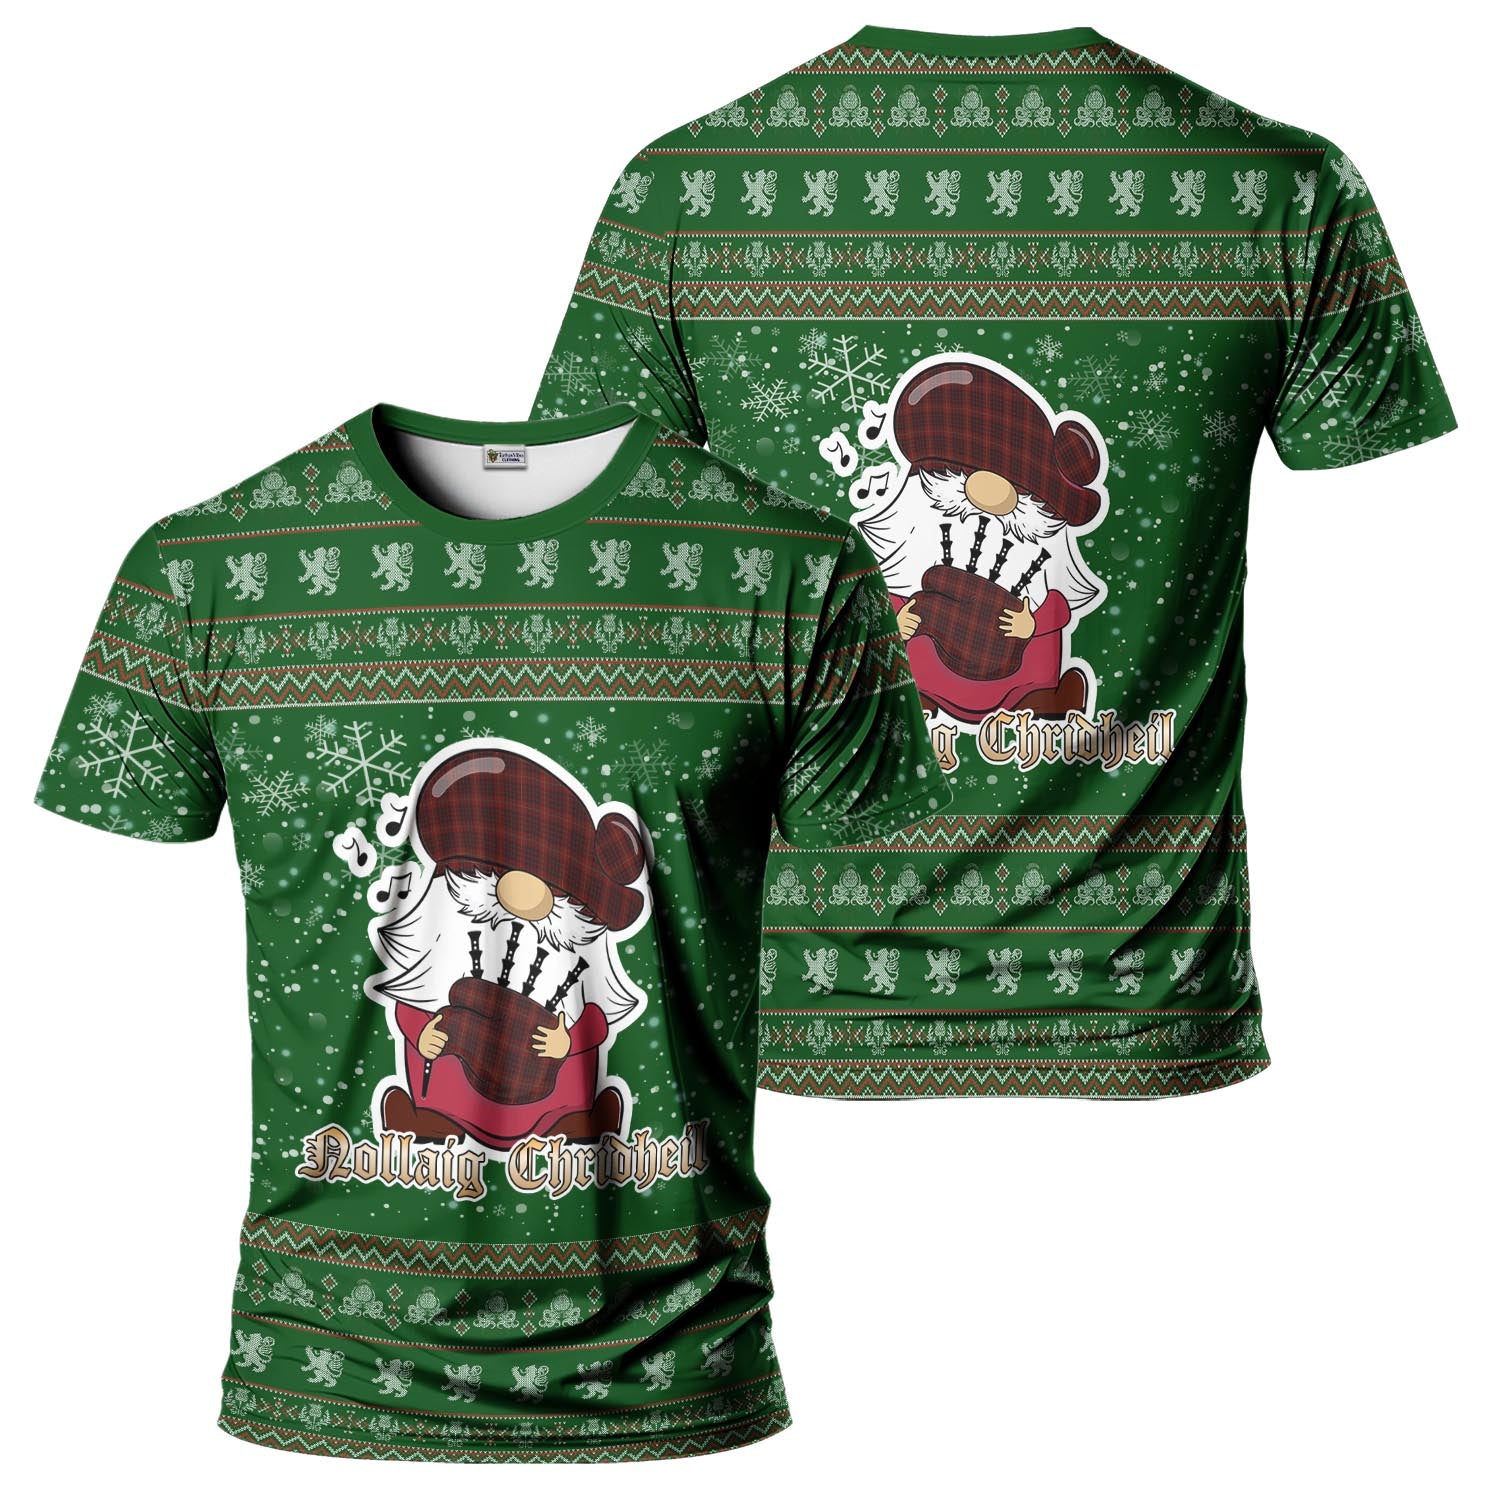 MacIan Clan Christmas Family T-Shirt with Funny Gnome Playing Bagpipes Men's Shirt Green - Tartanvibesclothing